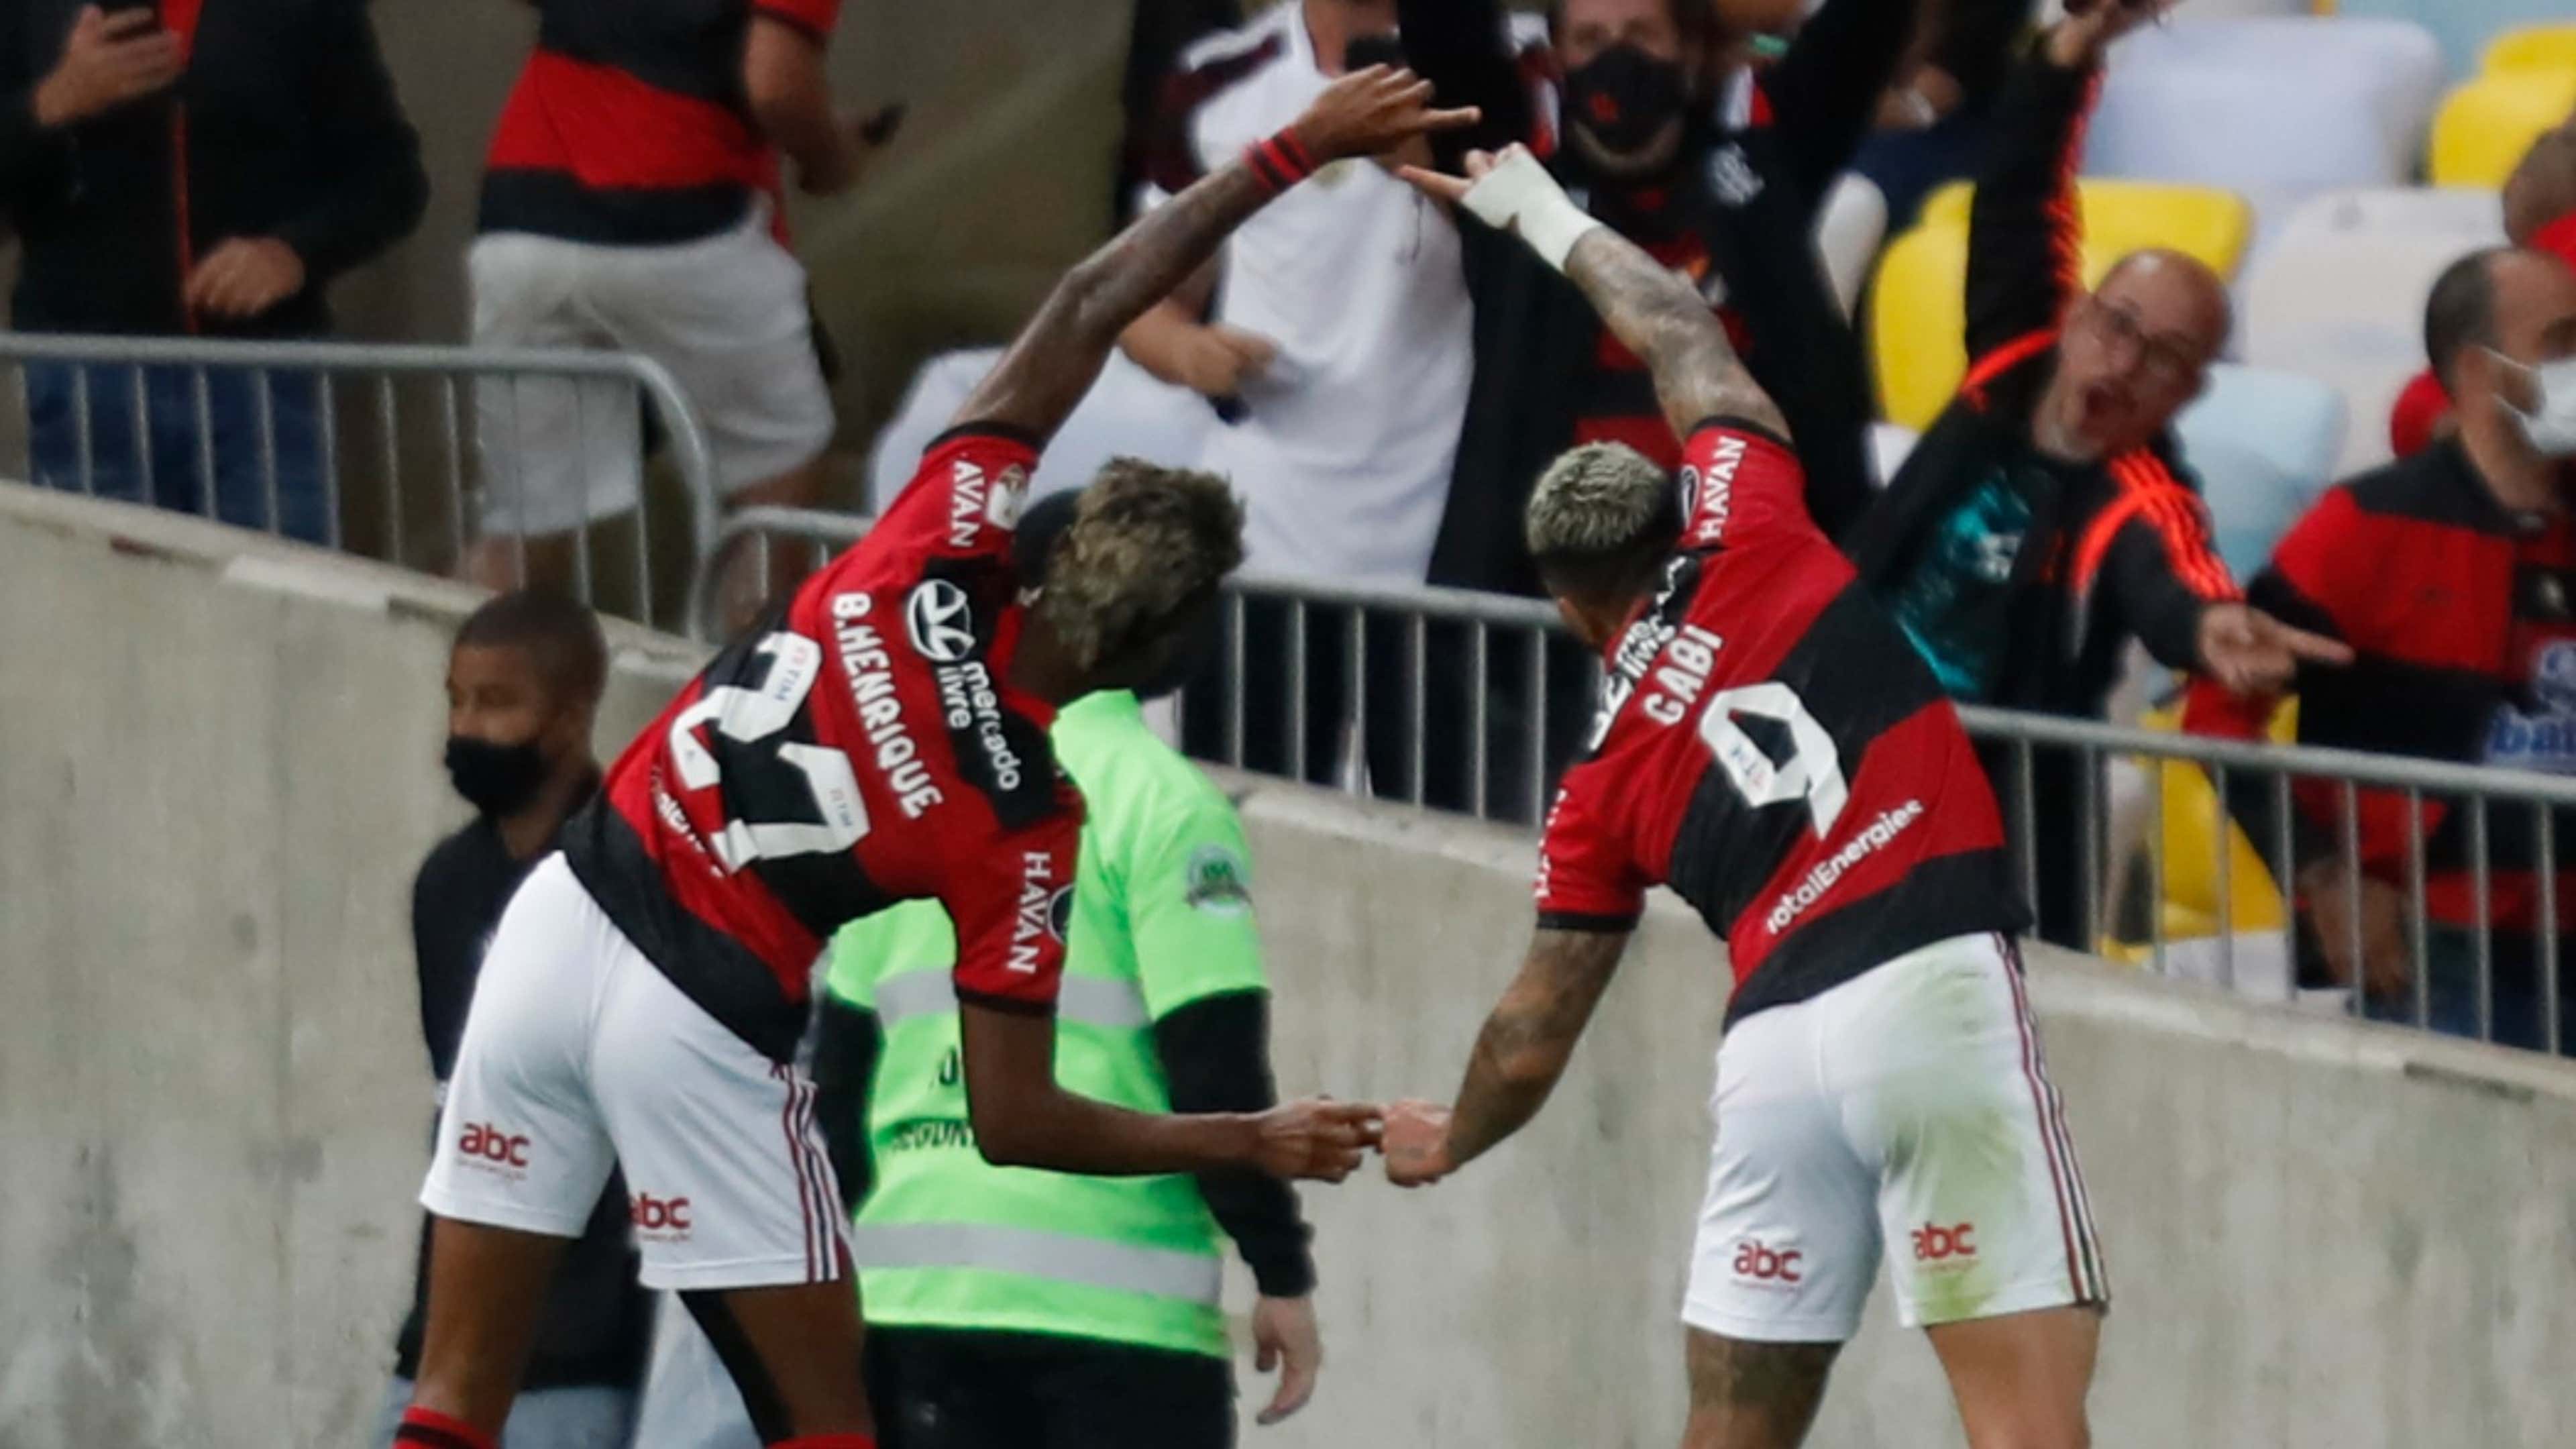 Flamengo x Barcelona de Guayaquil AO VIVO